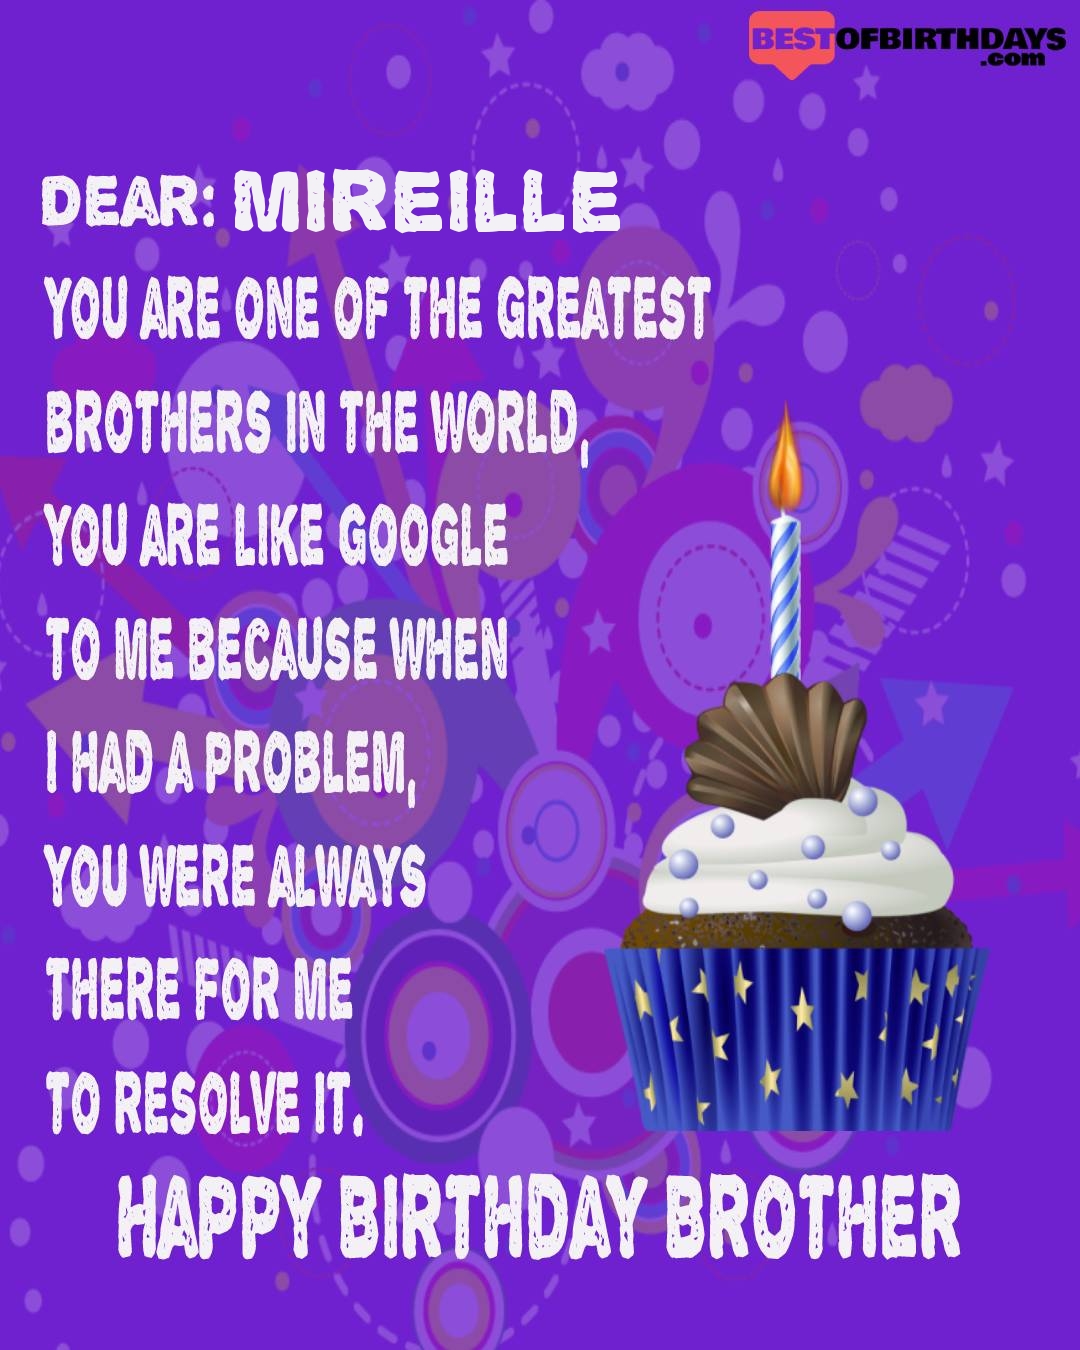 Happy birthday mireille bhai brother bro